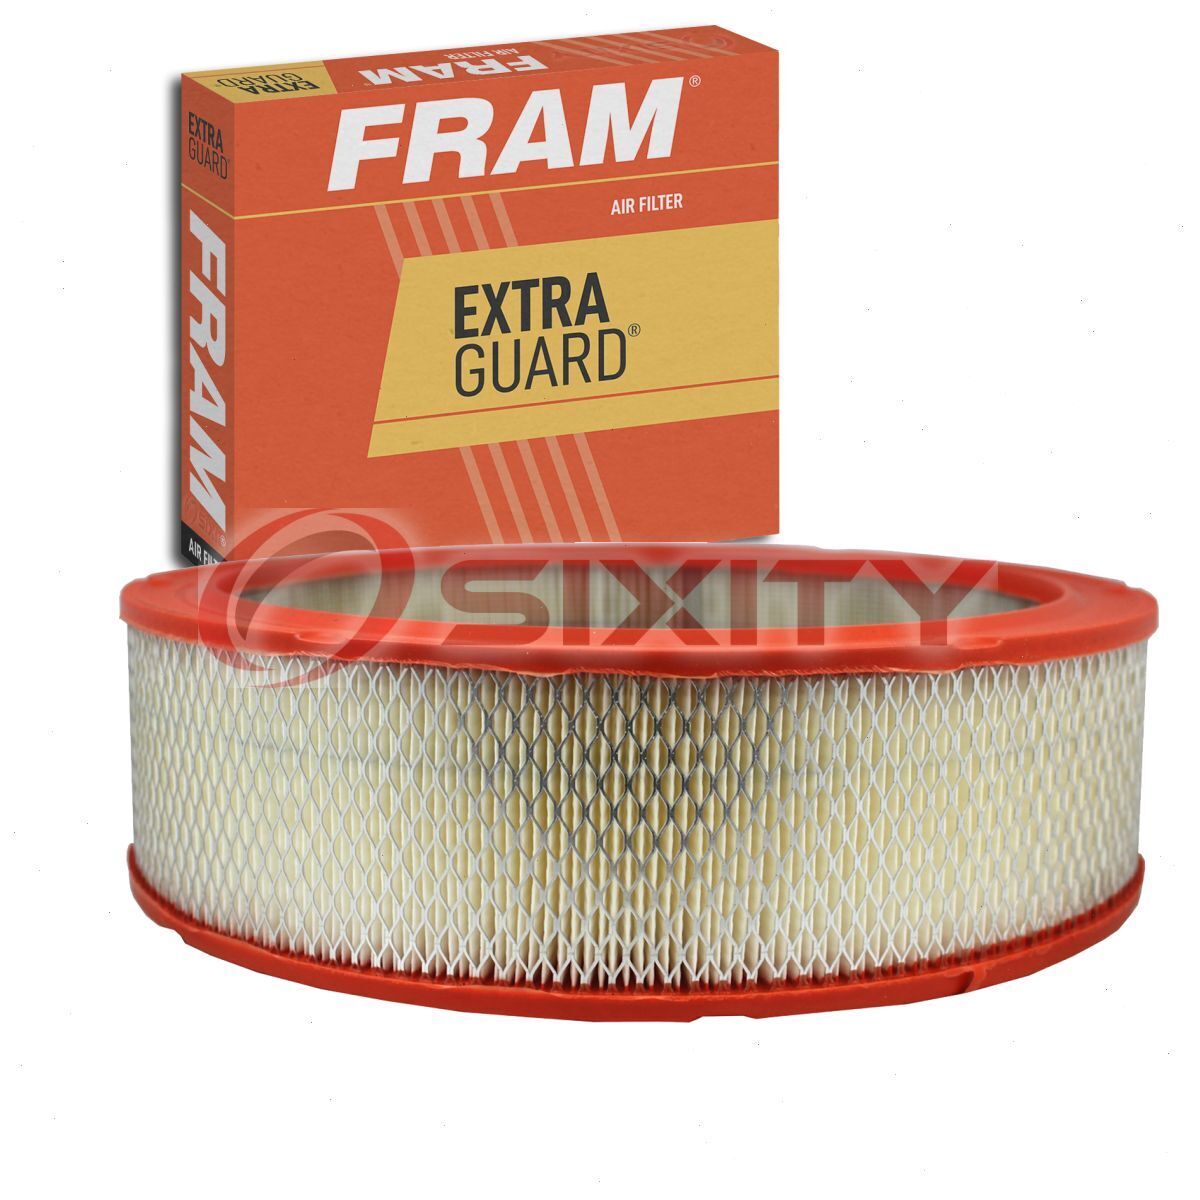 FRAM Extra Guard Air Filter for 1968-1971 Pontiac Acadian Intake Inlet xn